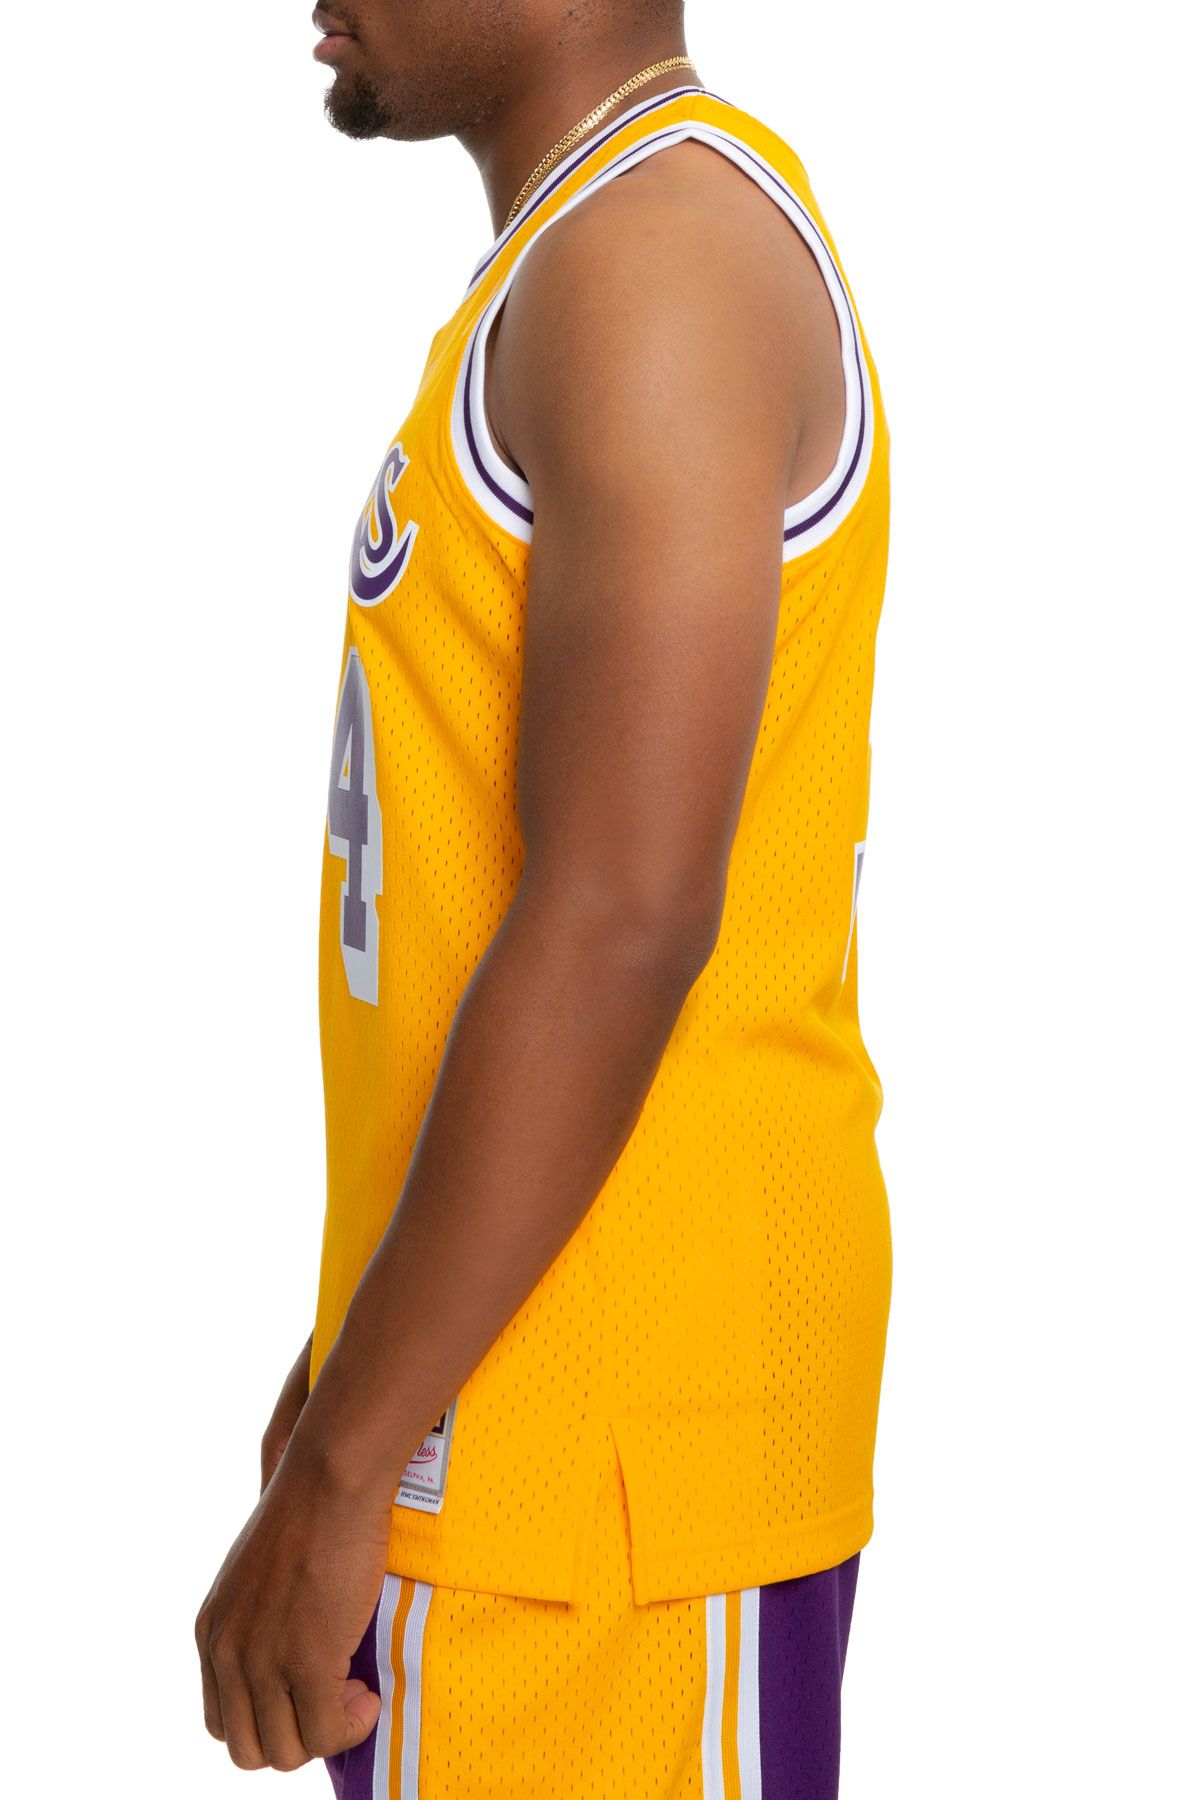 Lakers yellow Jersey dress #jerseydress - Depop